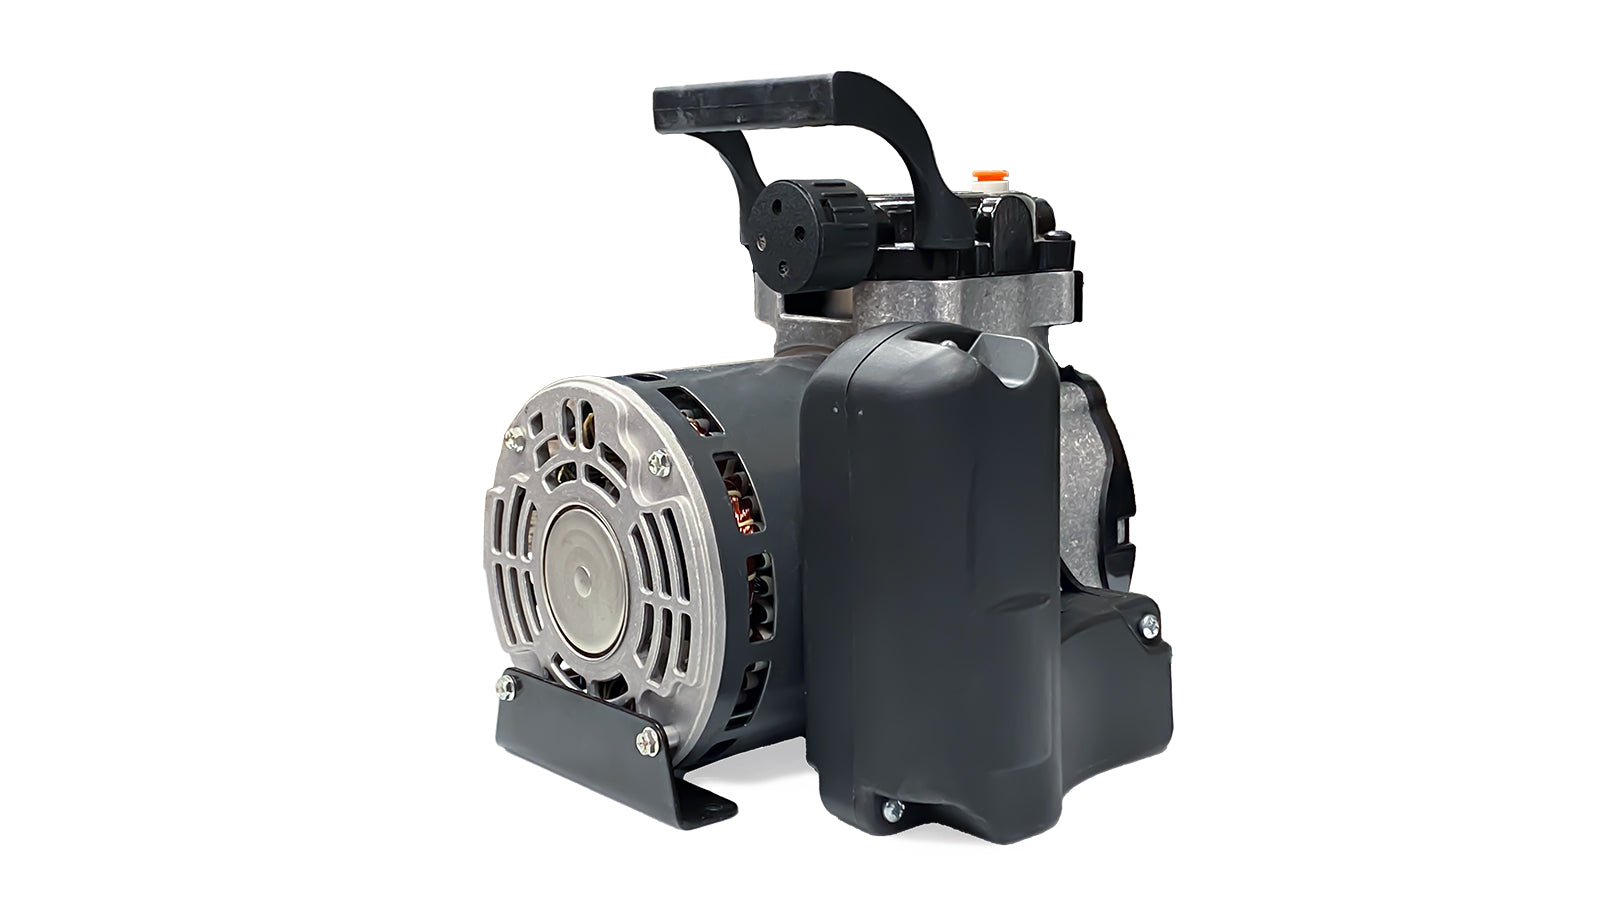 OUYZGIA Air Assist Pump for Laser Engraver Cutter, Air Assist Set